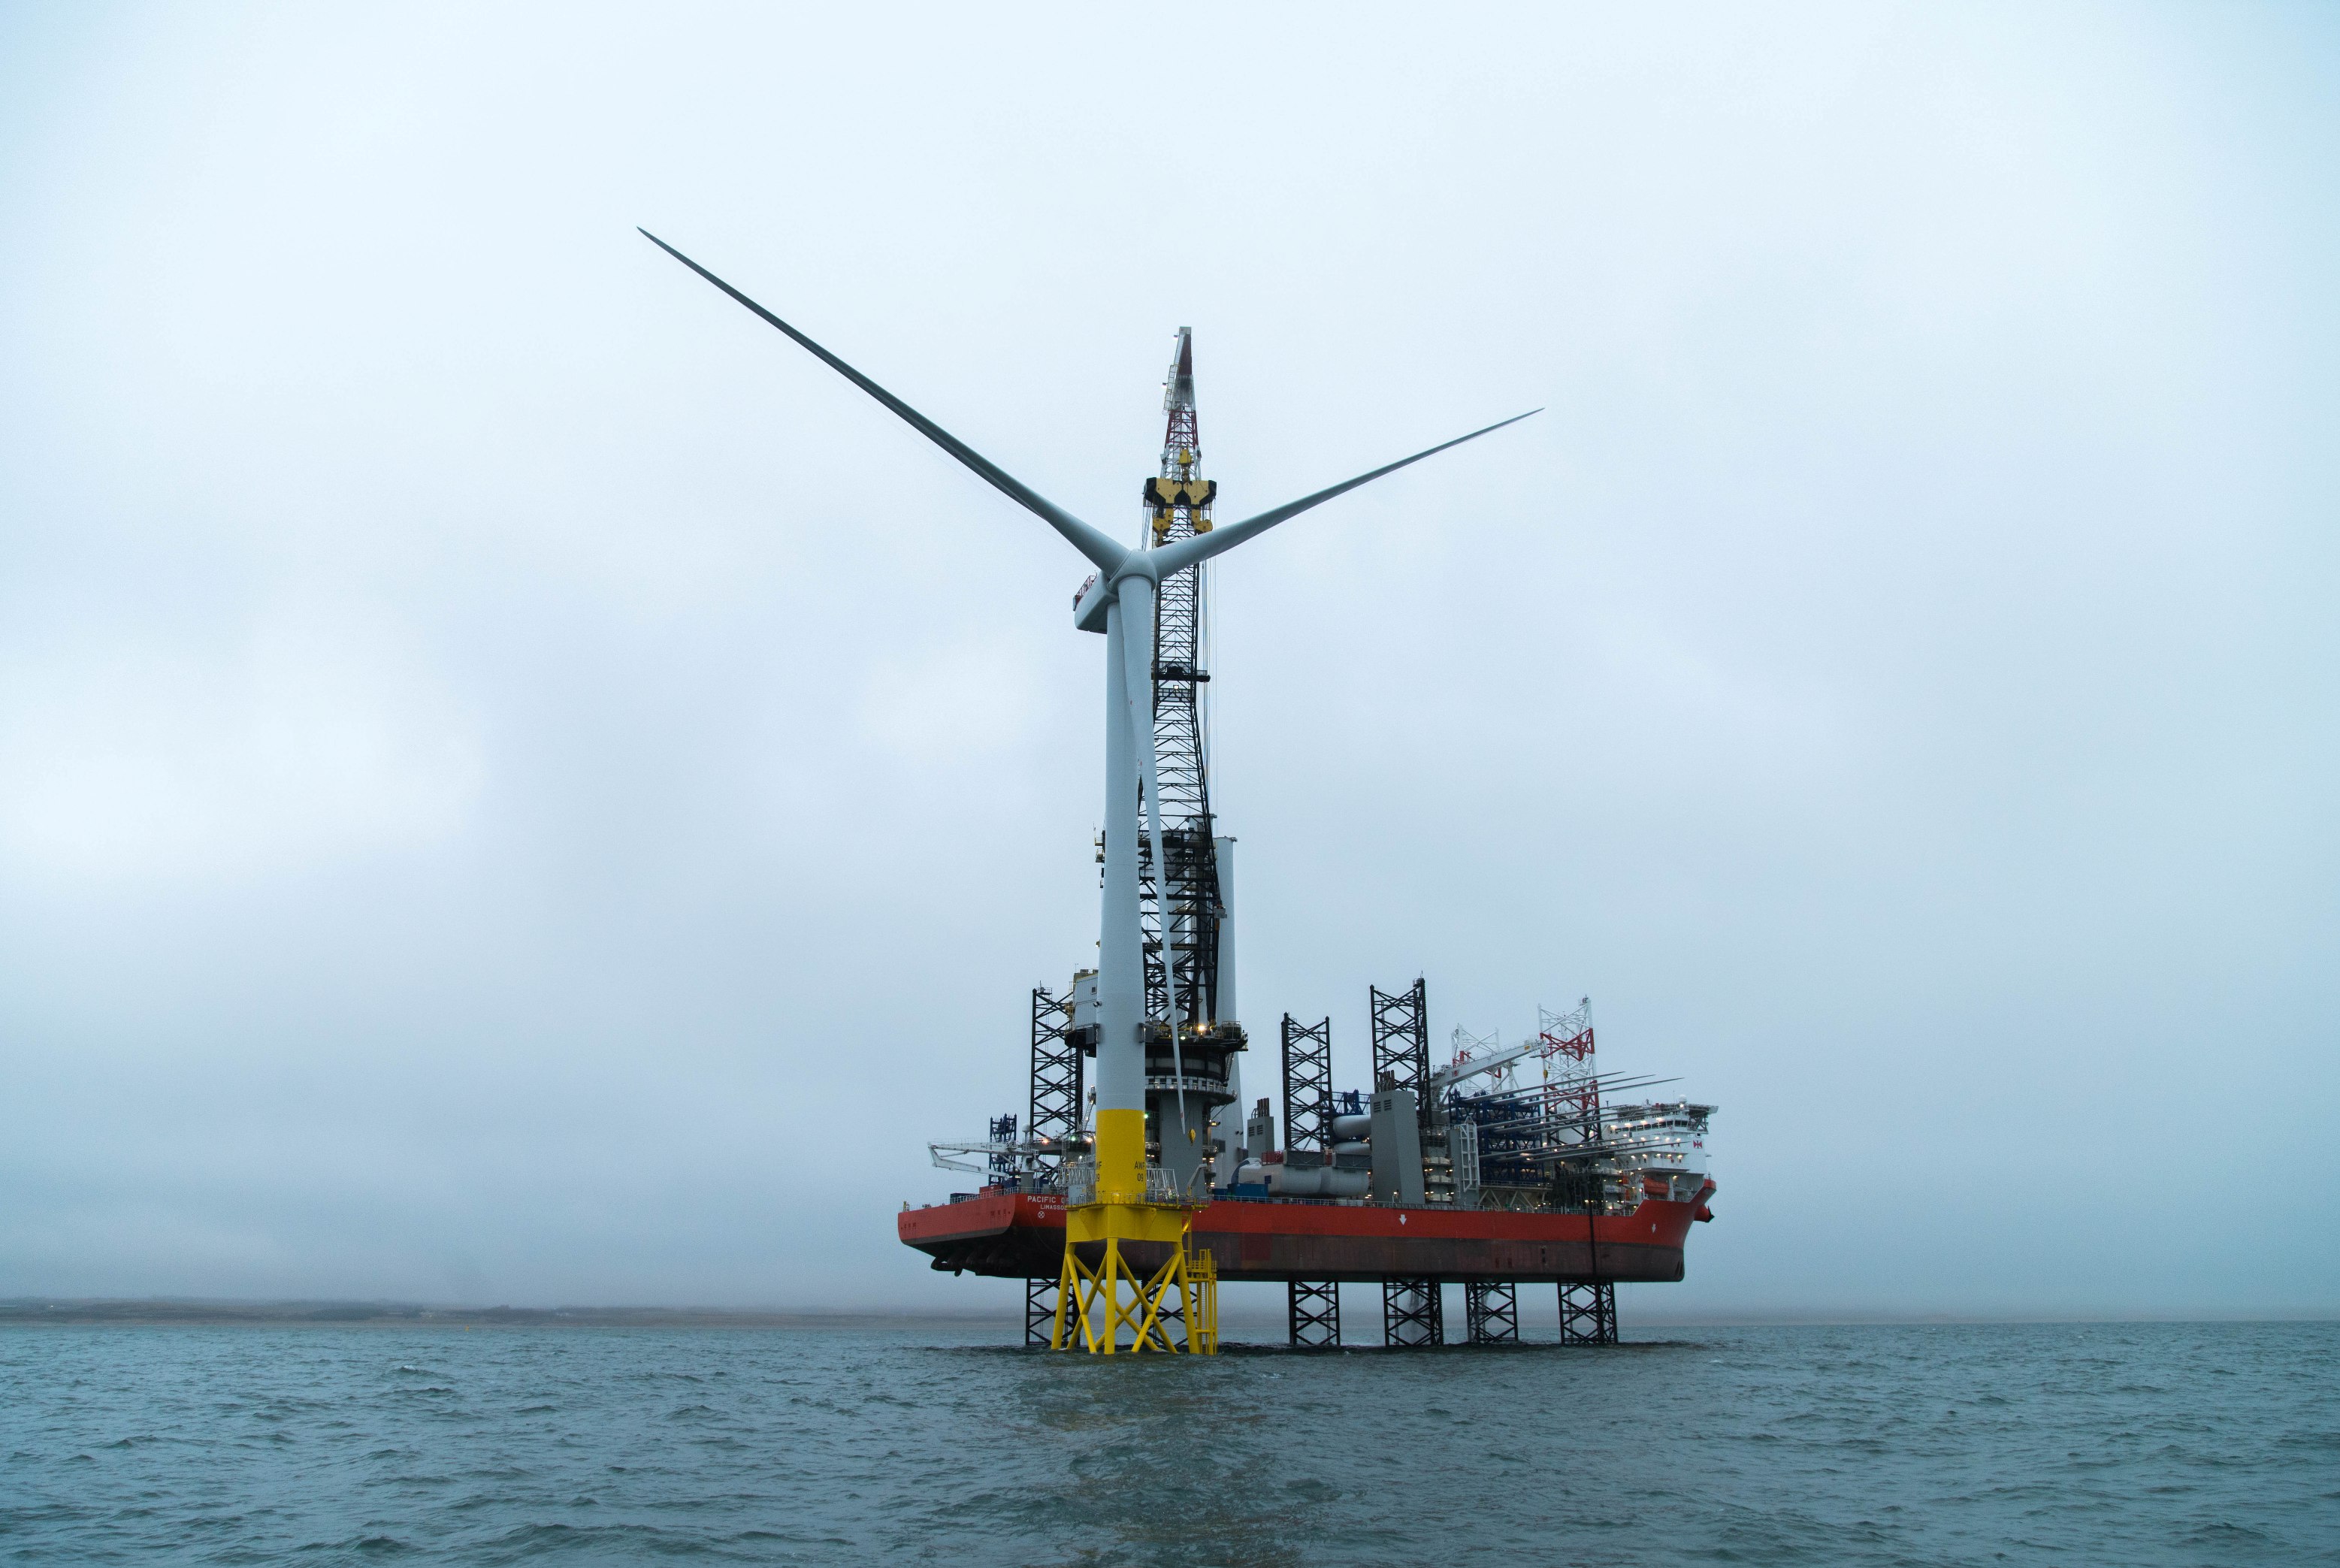 Wind turbine installation in Scottish waters